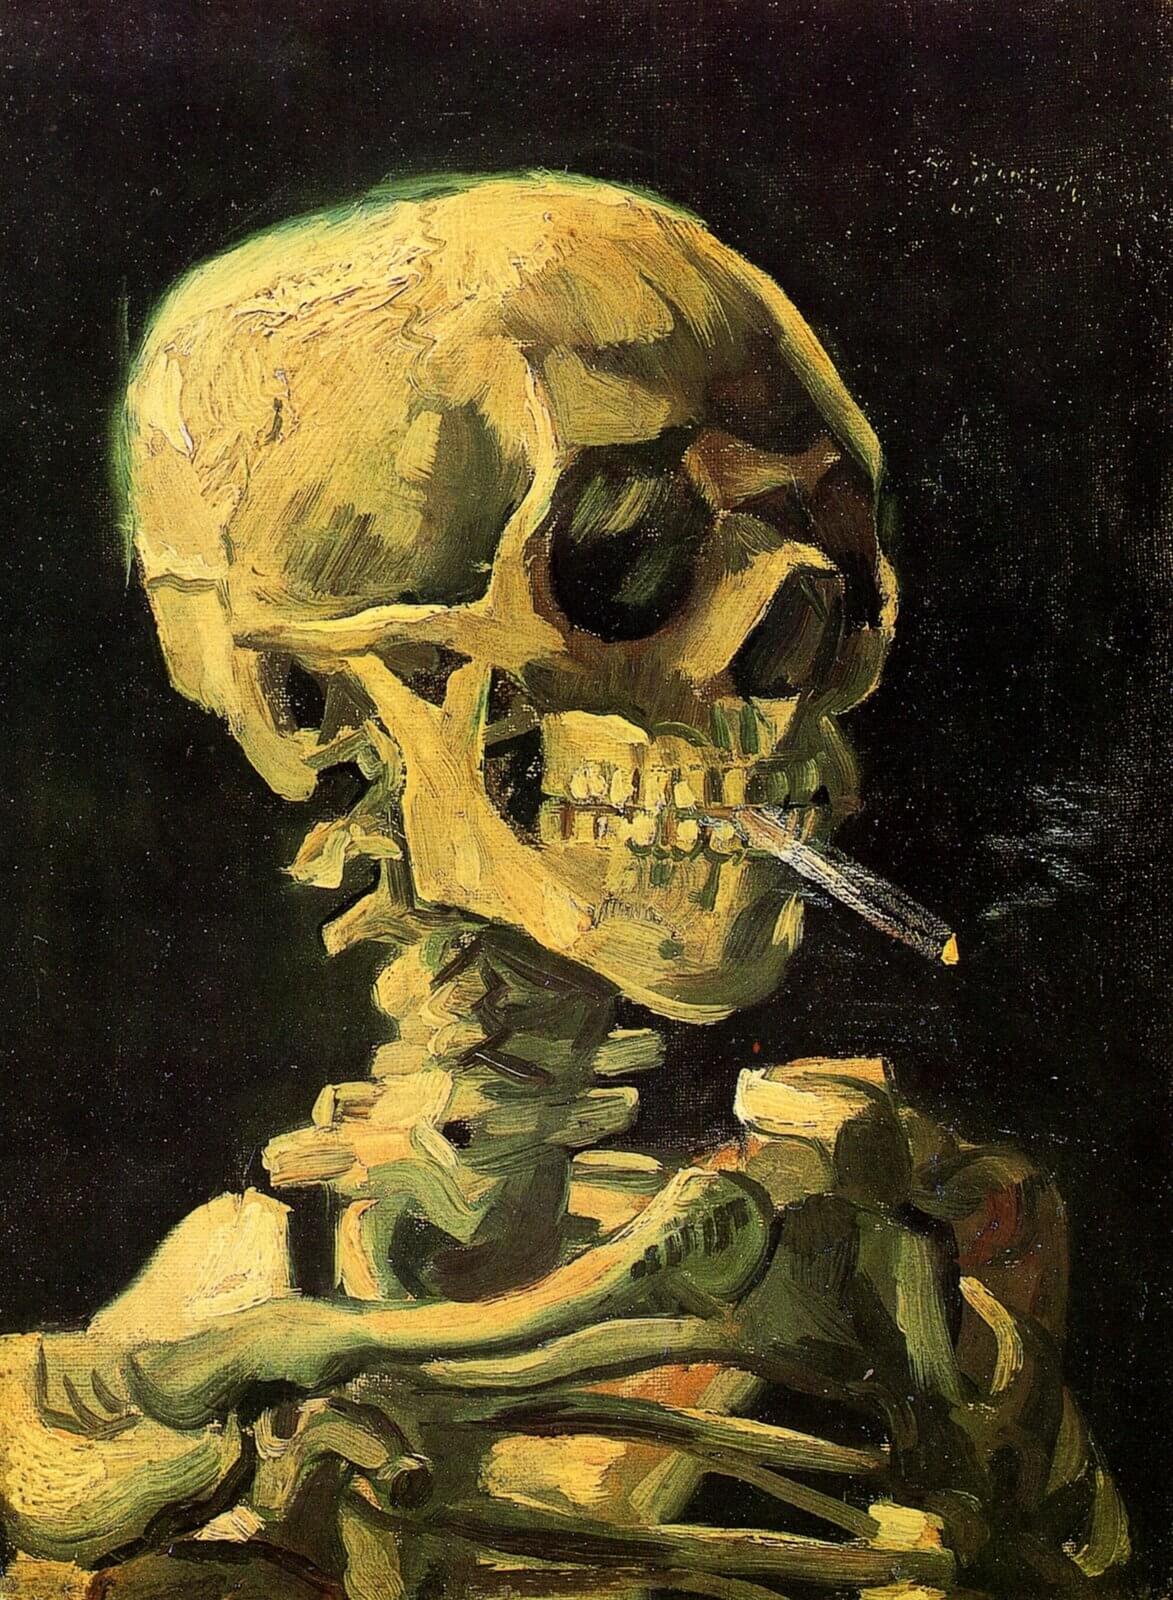 Skull with Burning Cigarette by Van Gogh.jpg